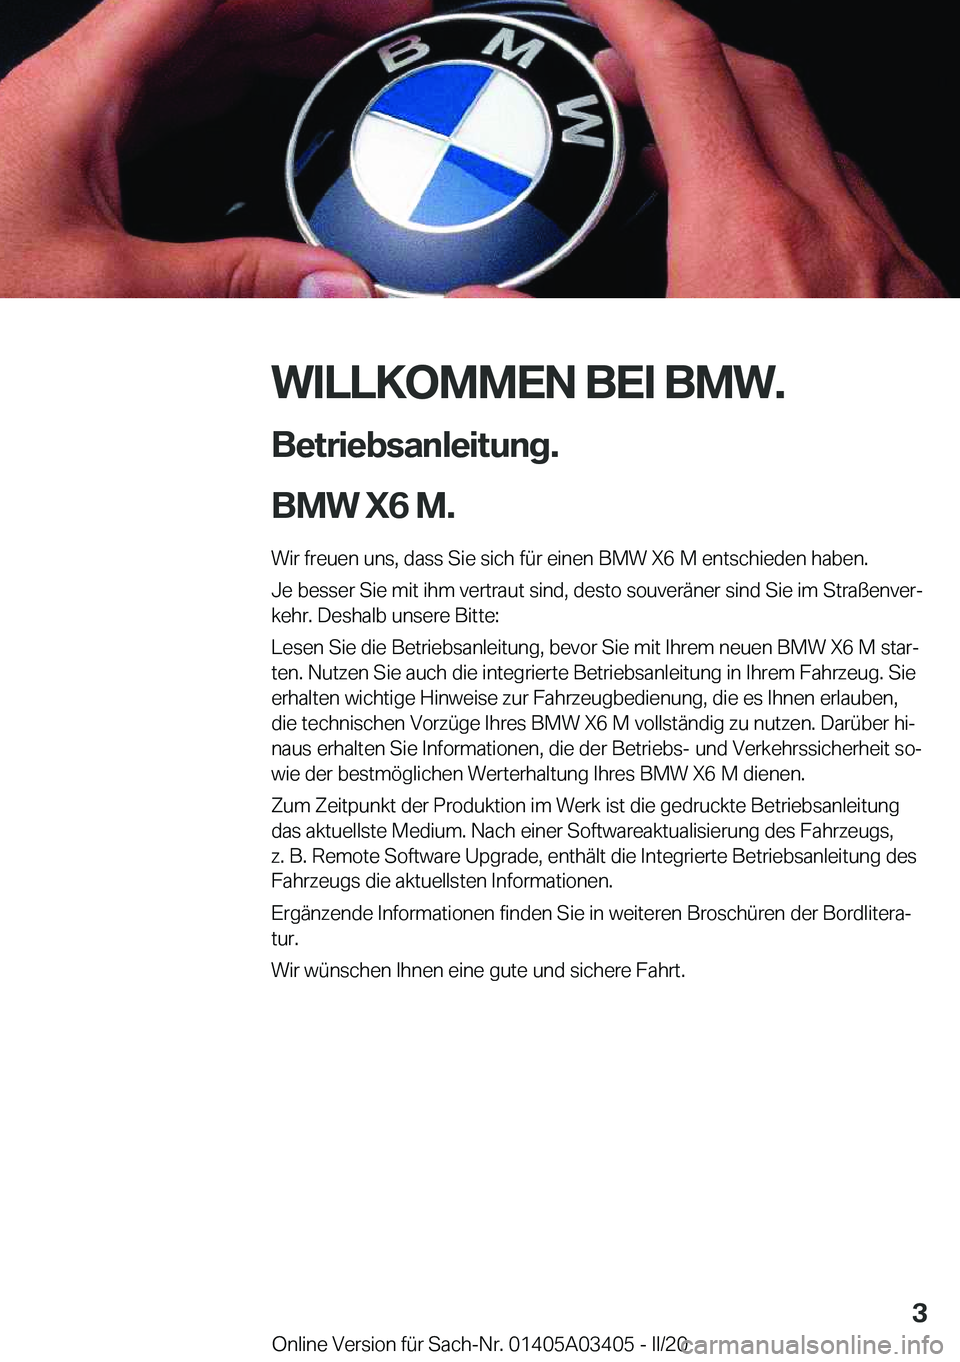 BMW X6 M 2020  Betriebsanleitungen (in German) �W�I�L�L�K�O�M�M�E�N��B�E�I��B�M�W�.�B�e�t�r�i�e�b�s�a�n�l�e�i�t�u�n�g�.
�B�M�W��X�6��M�. �W�i�r��f�r�e�u�e�n��u�n�s�,��d�a�s�s��S�i�e��s�i�c�h��f�